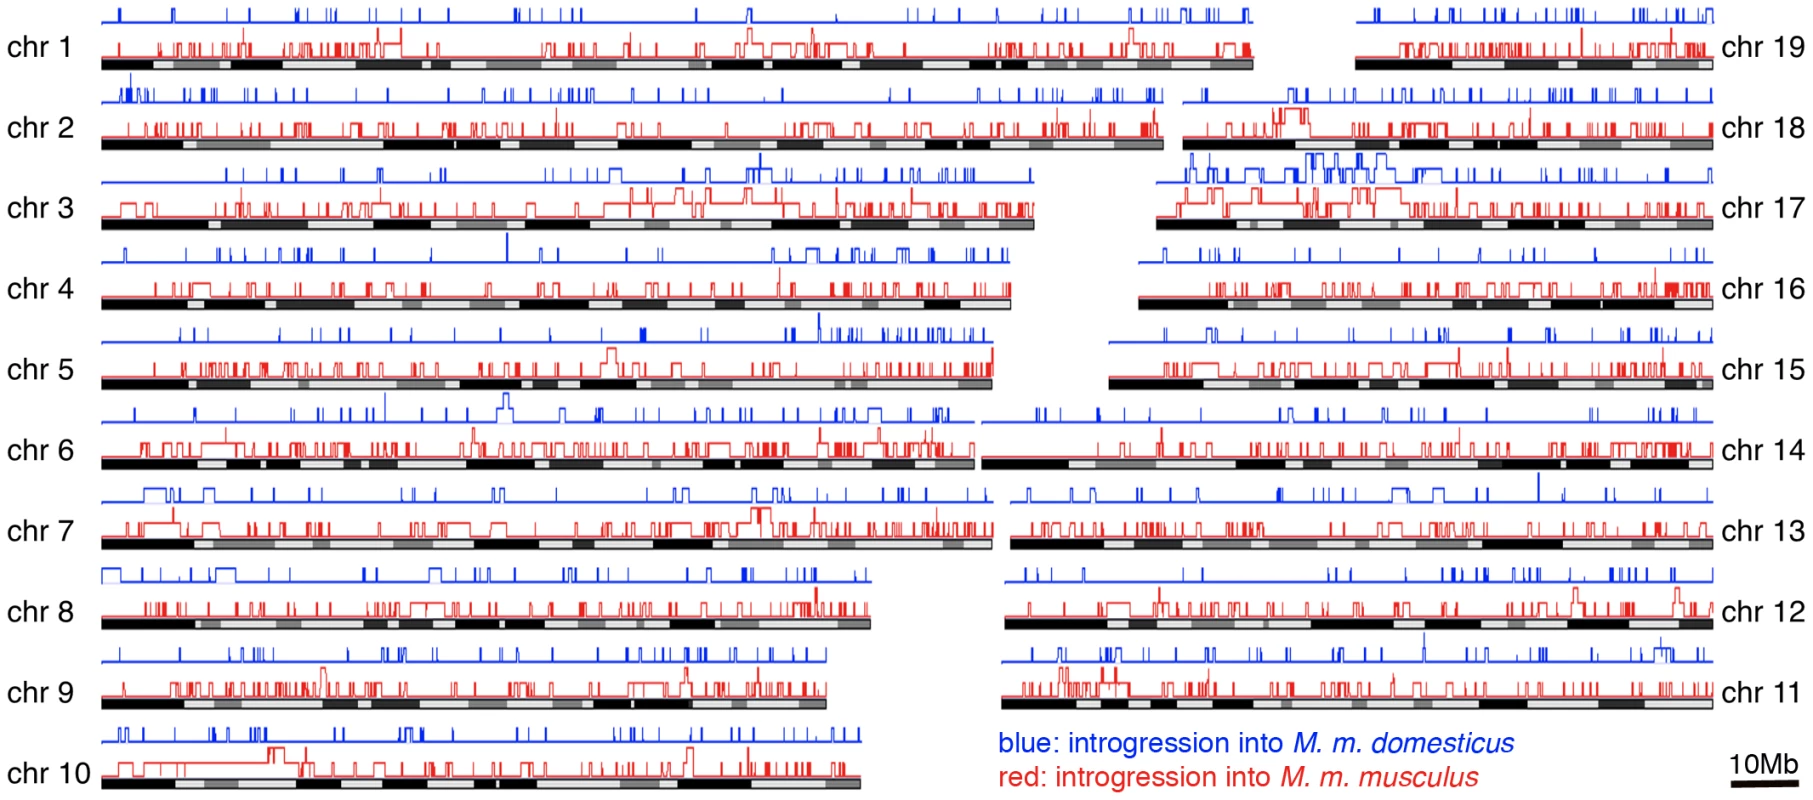 Distribution of introgressed regions across the chromosomes.